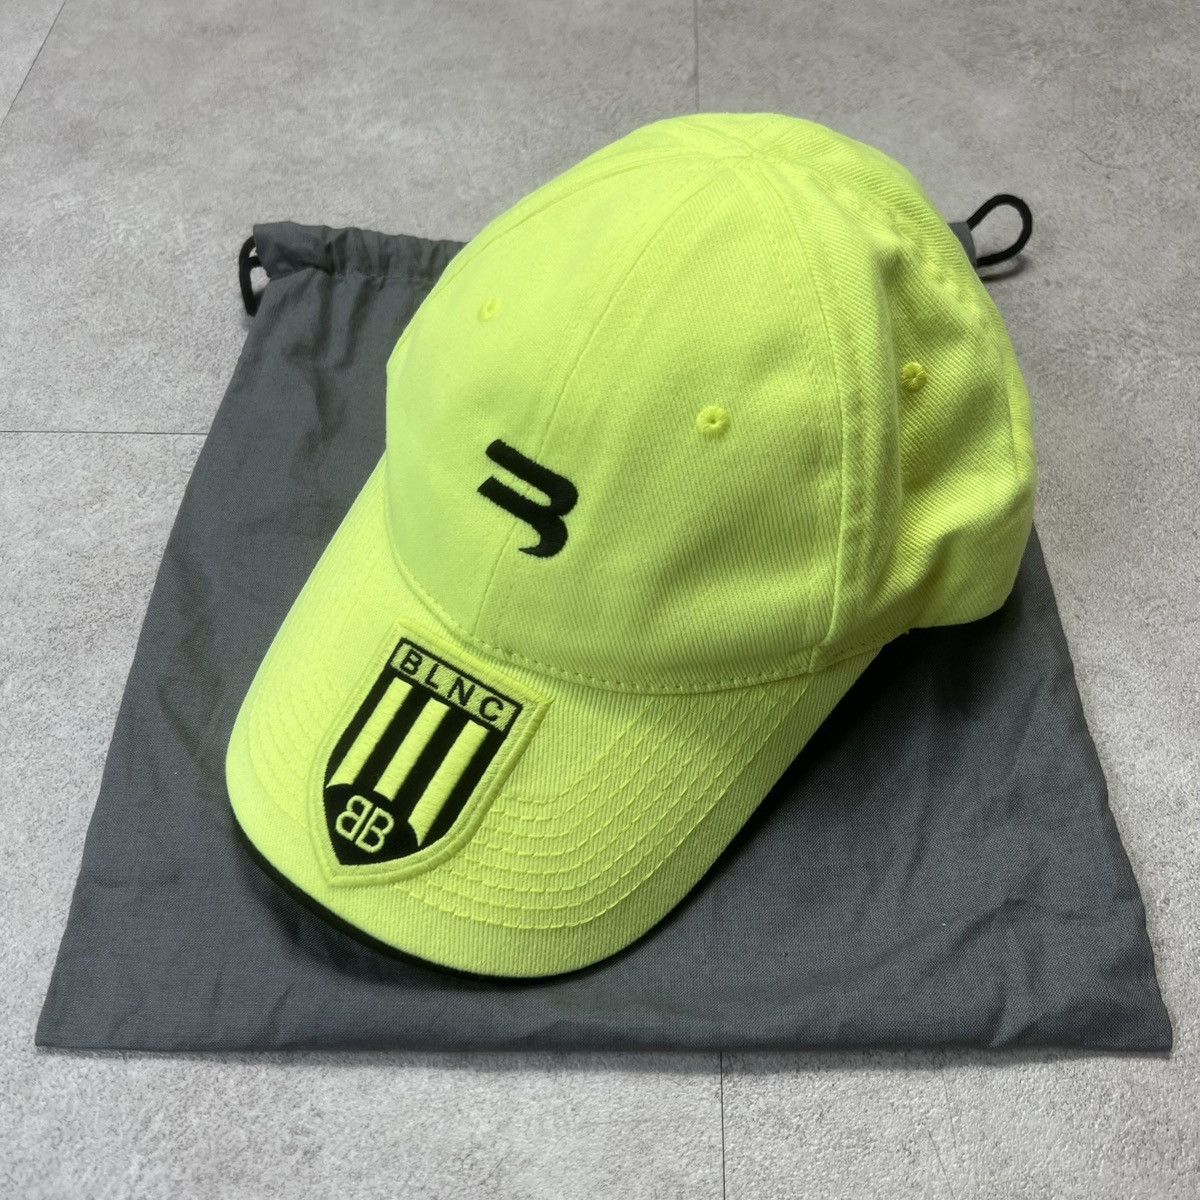 Pre-owned Balenciaga 3b Logo Yellow Cap Hat